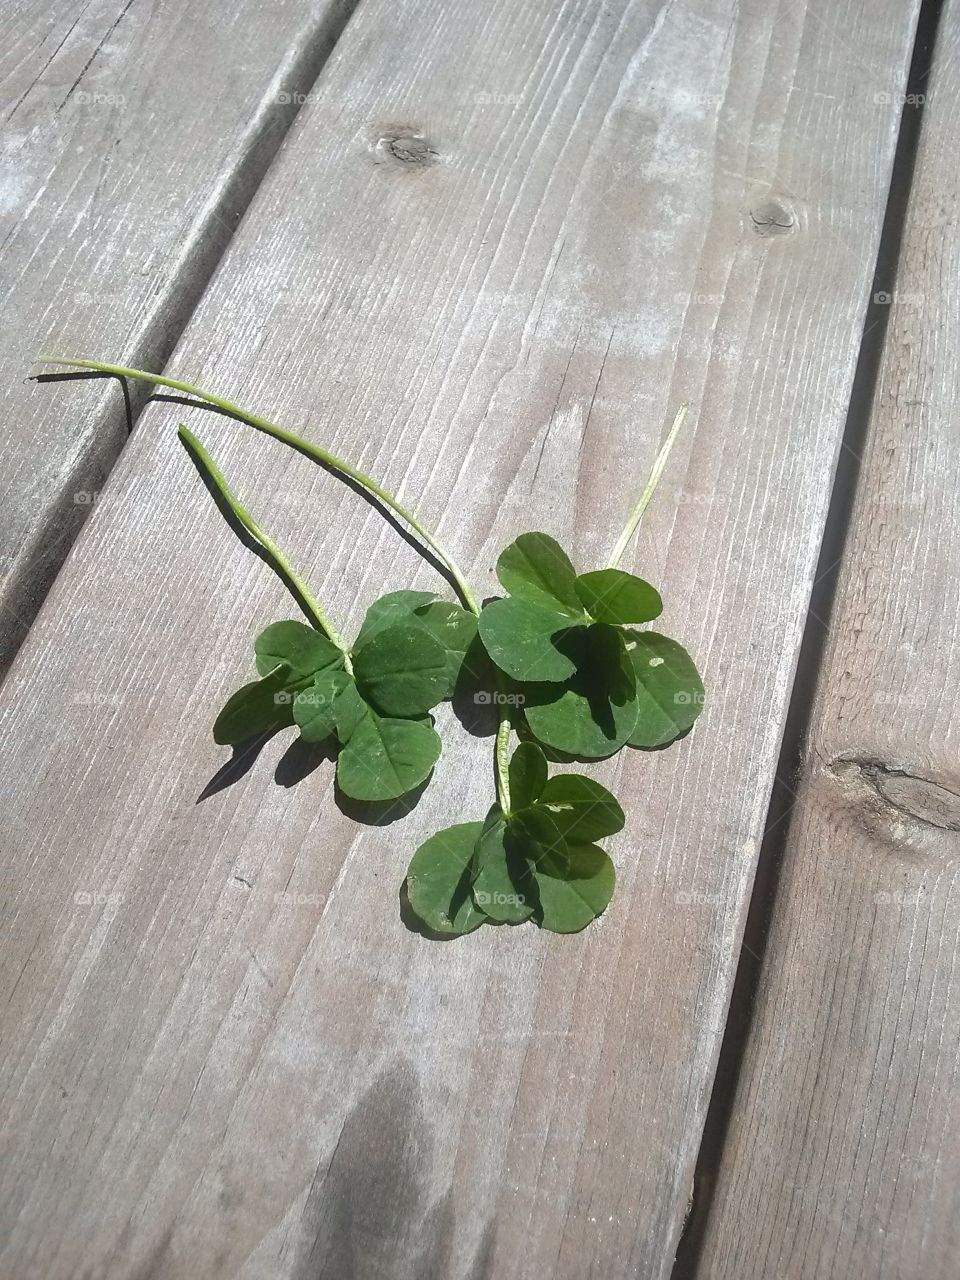 Multiple leaves on a clover